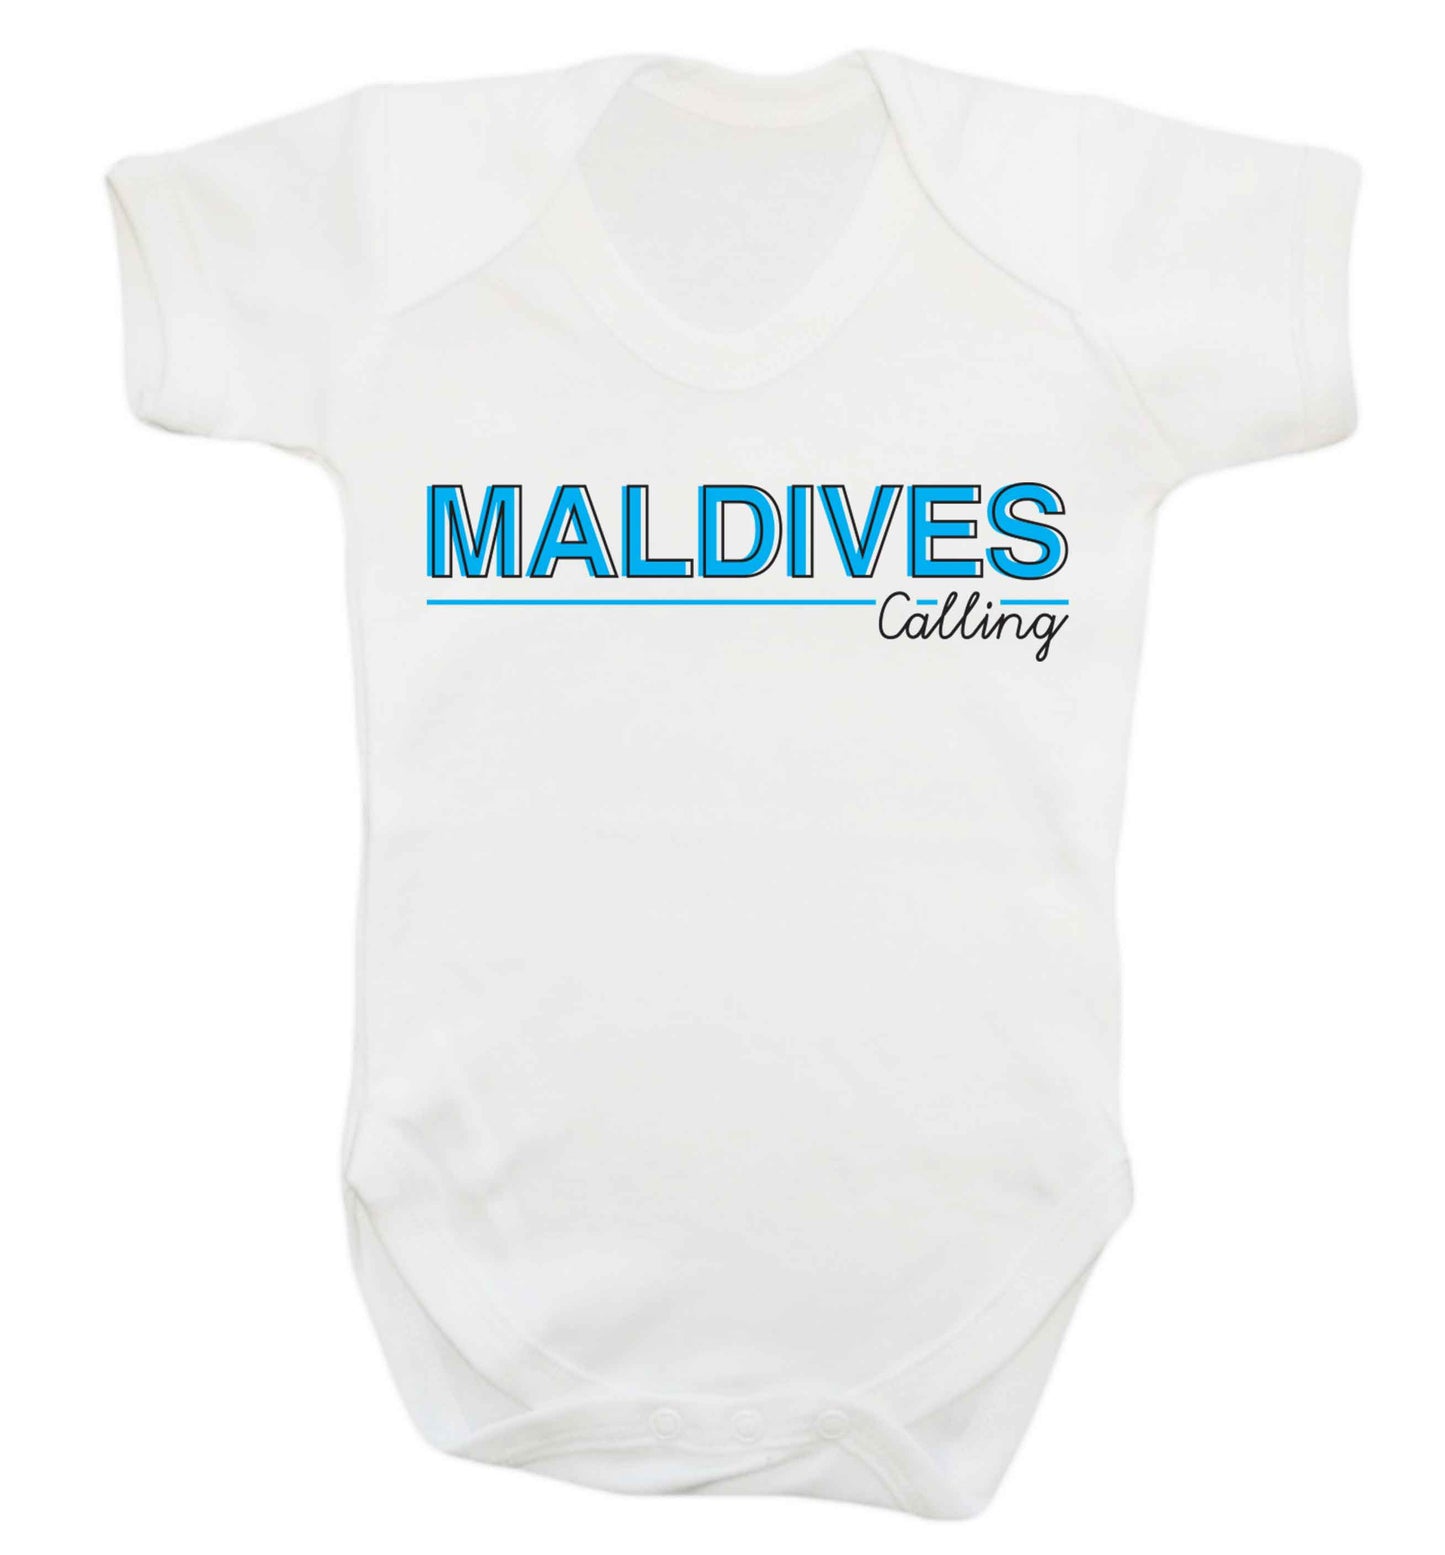 Maldives calling Baby Vest white 18-24 months